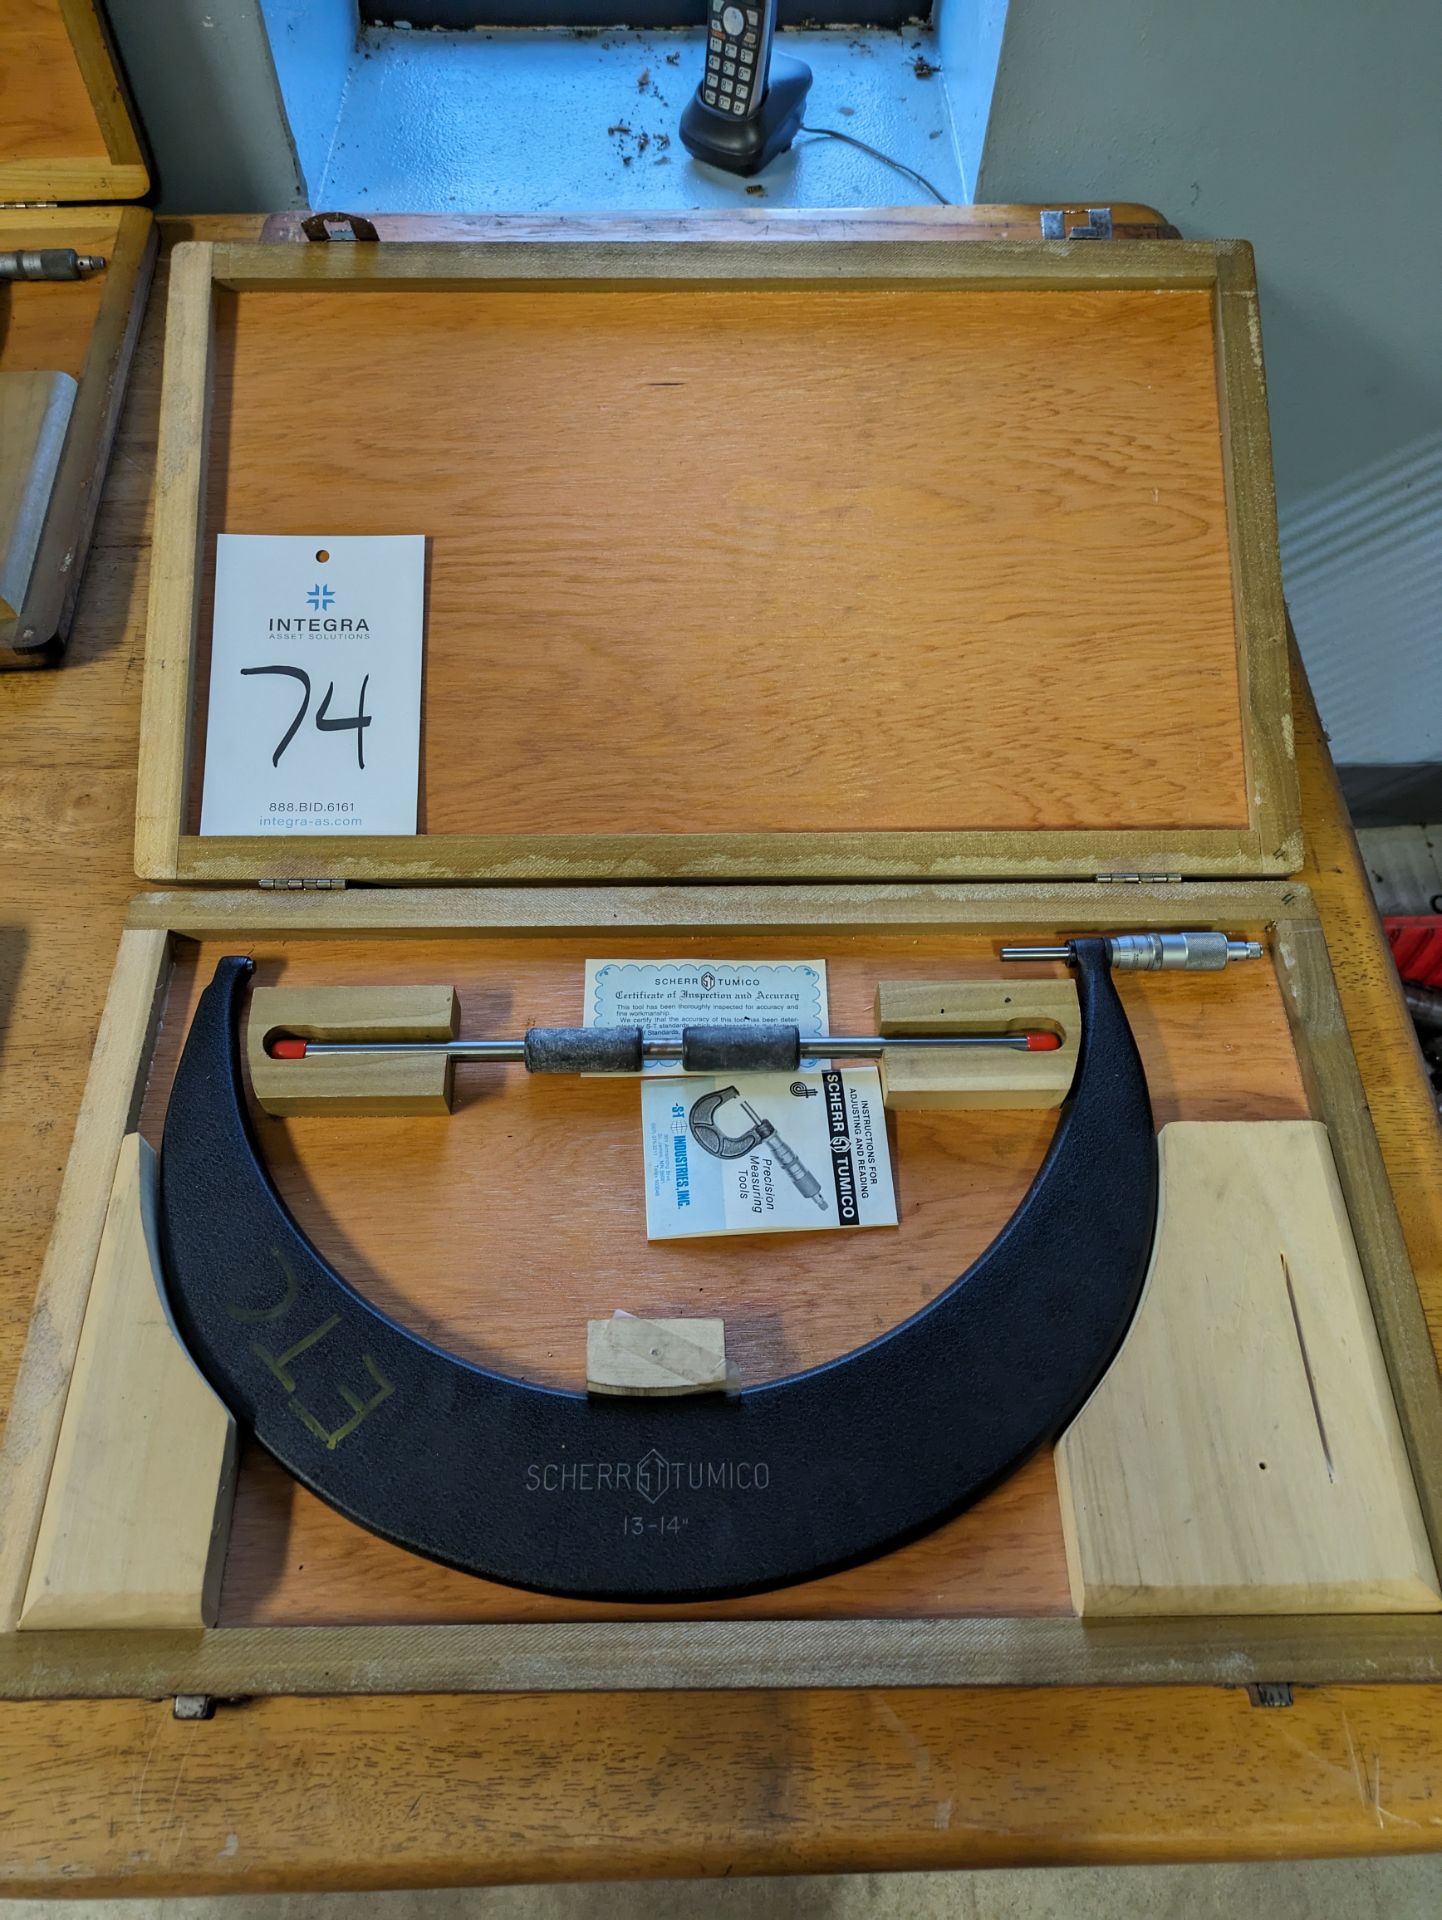 Scherr Tumico 13" - 14" O.D. Micrometer